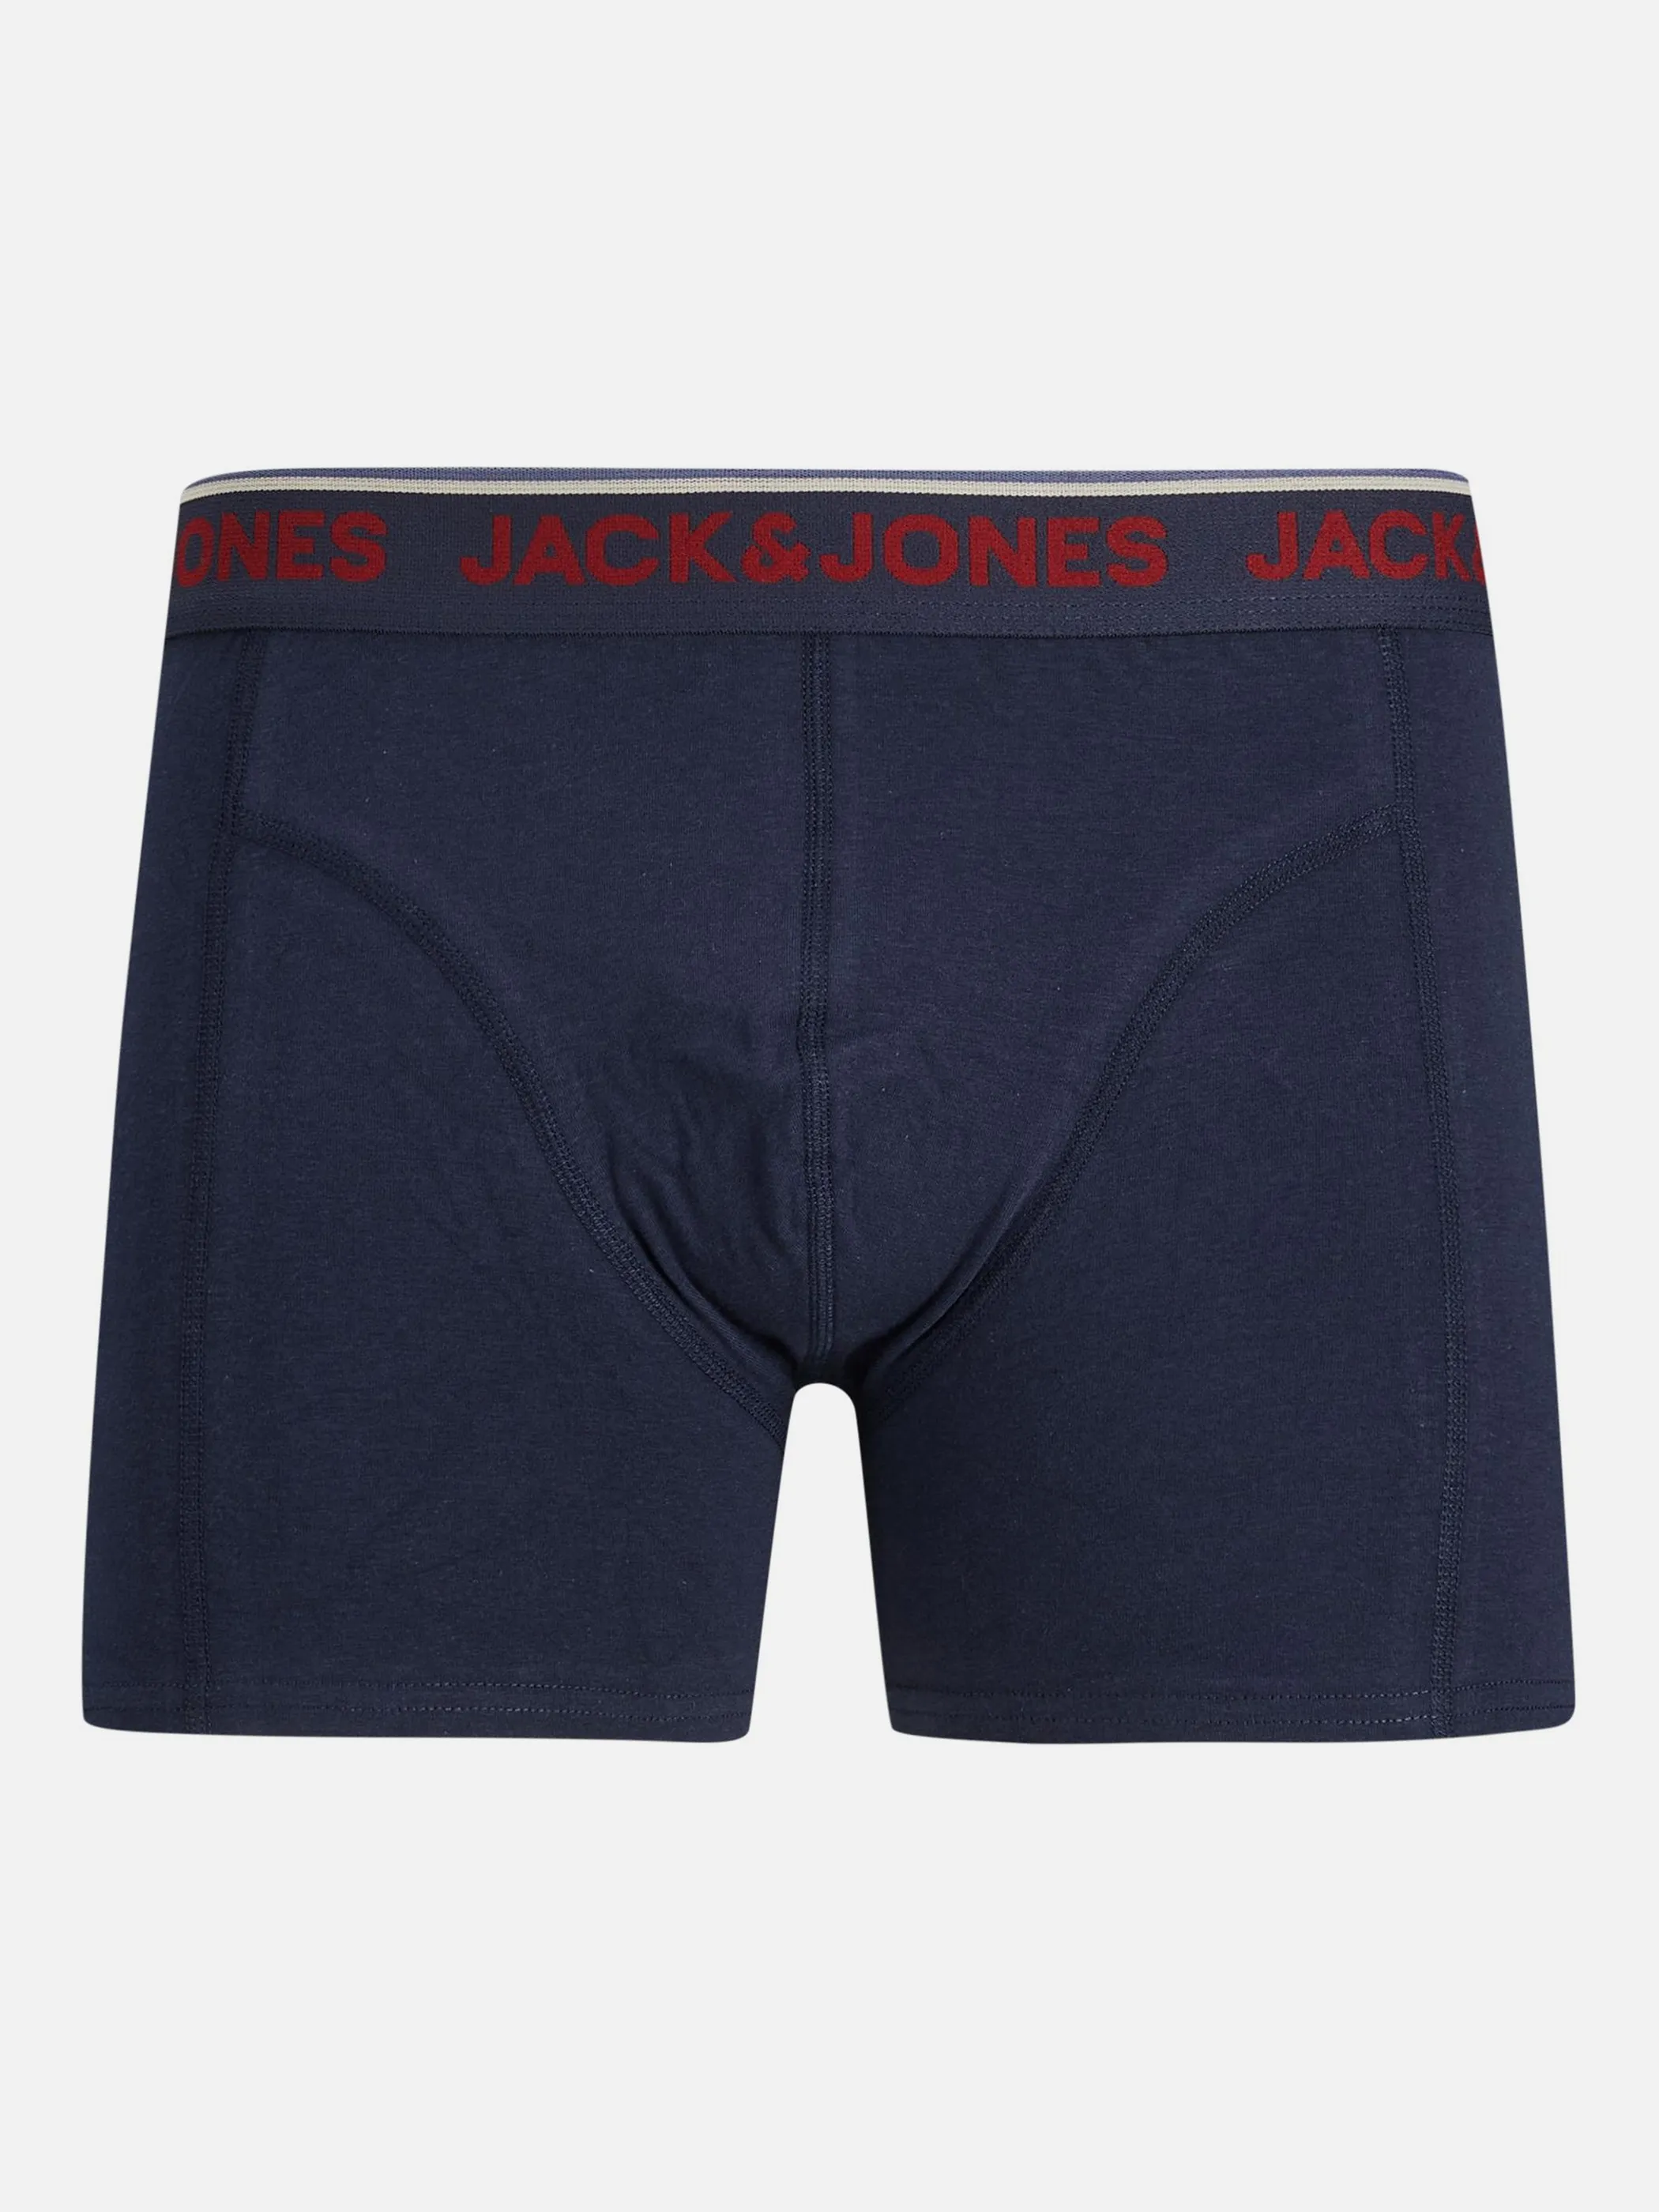 Jack Jones 12205052 JACRESORT TRUNKS 3-PA Schwarz 861270 274995001 5